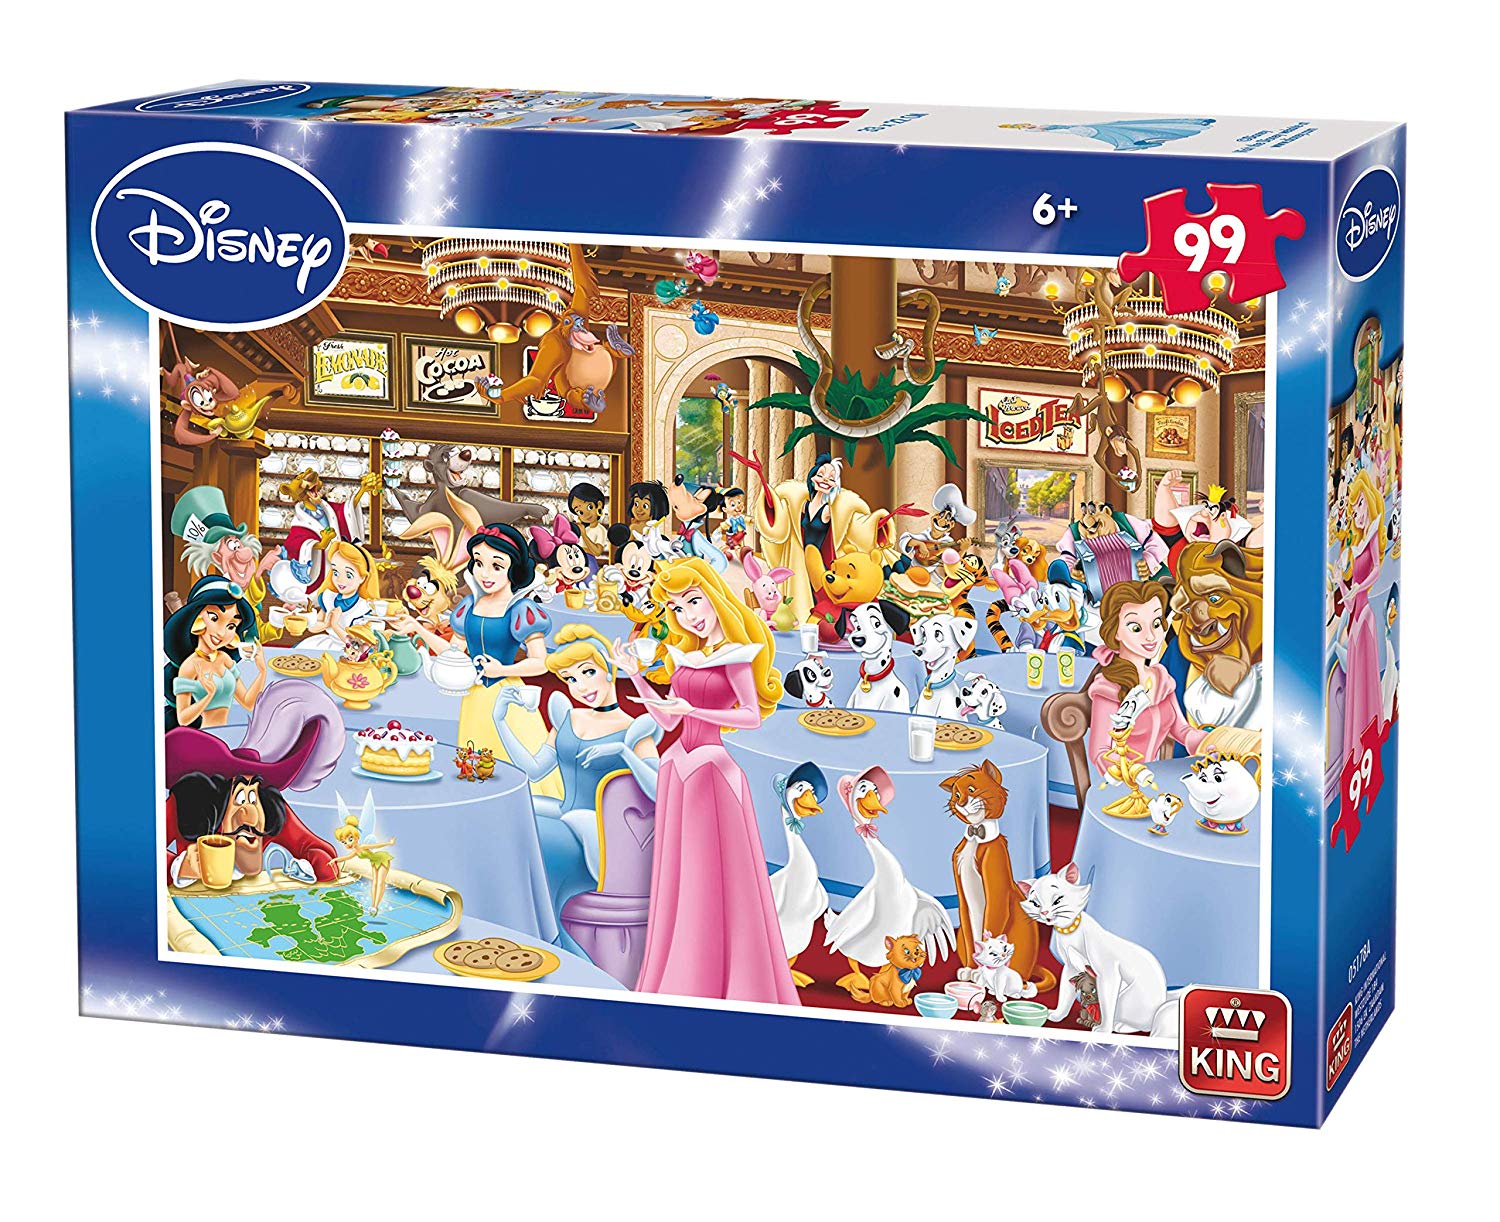 King Disney Puzzle – 99 Pieces Classic